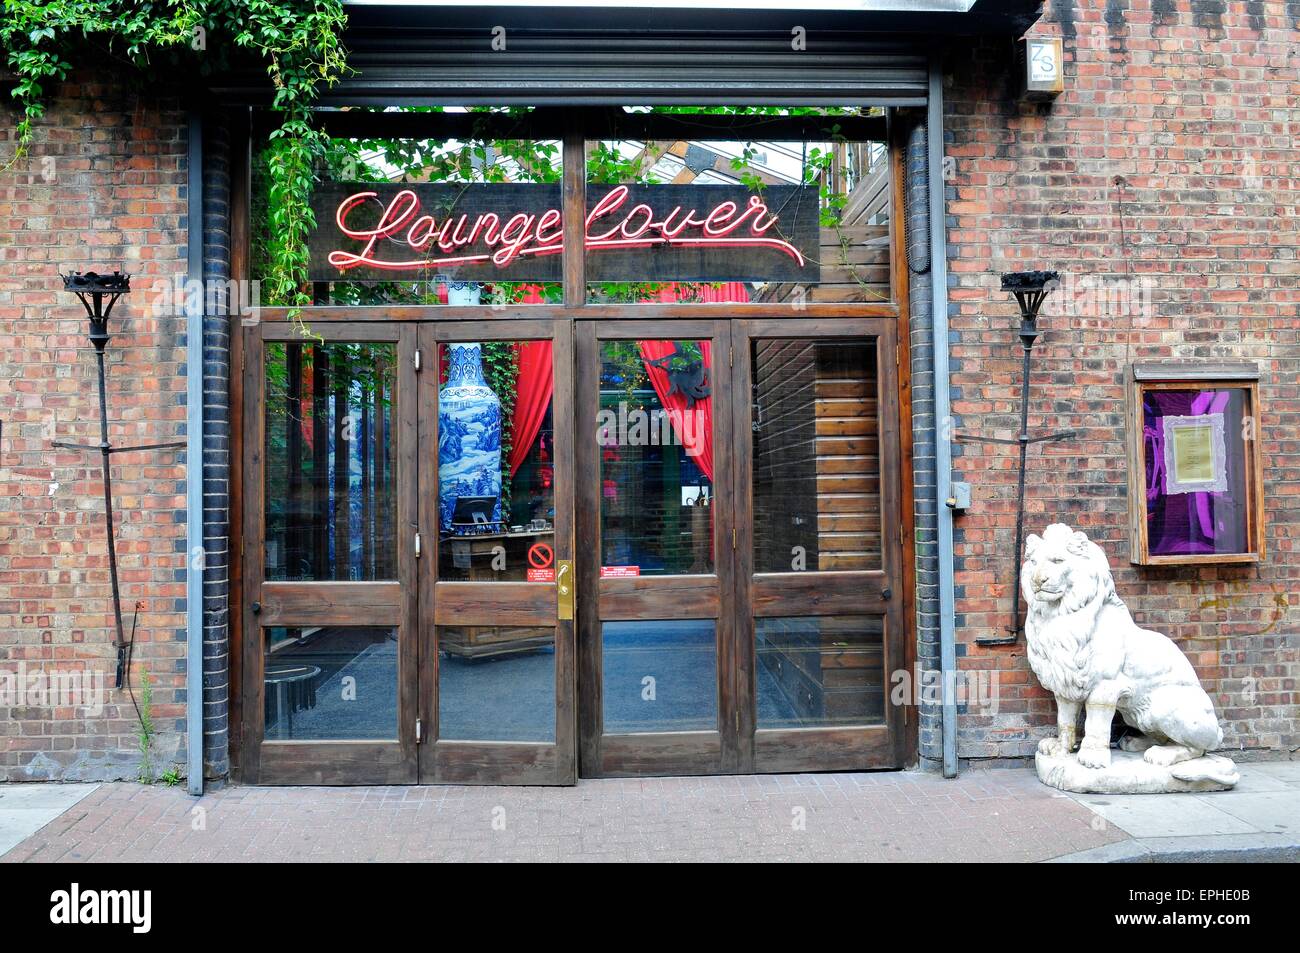 Entrance to Lounge Lover Bar, Shoreditch, London, England, UK Stock Photo